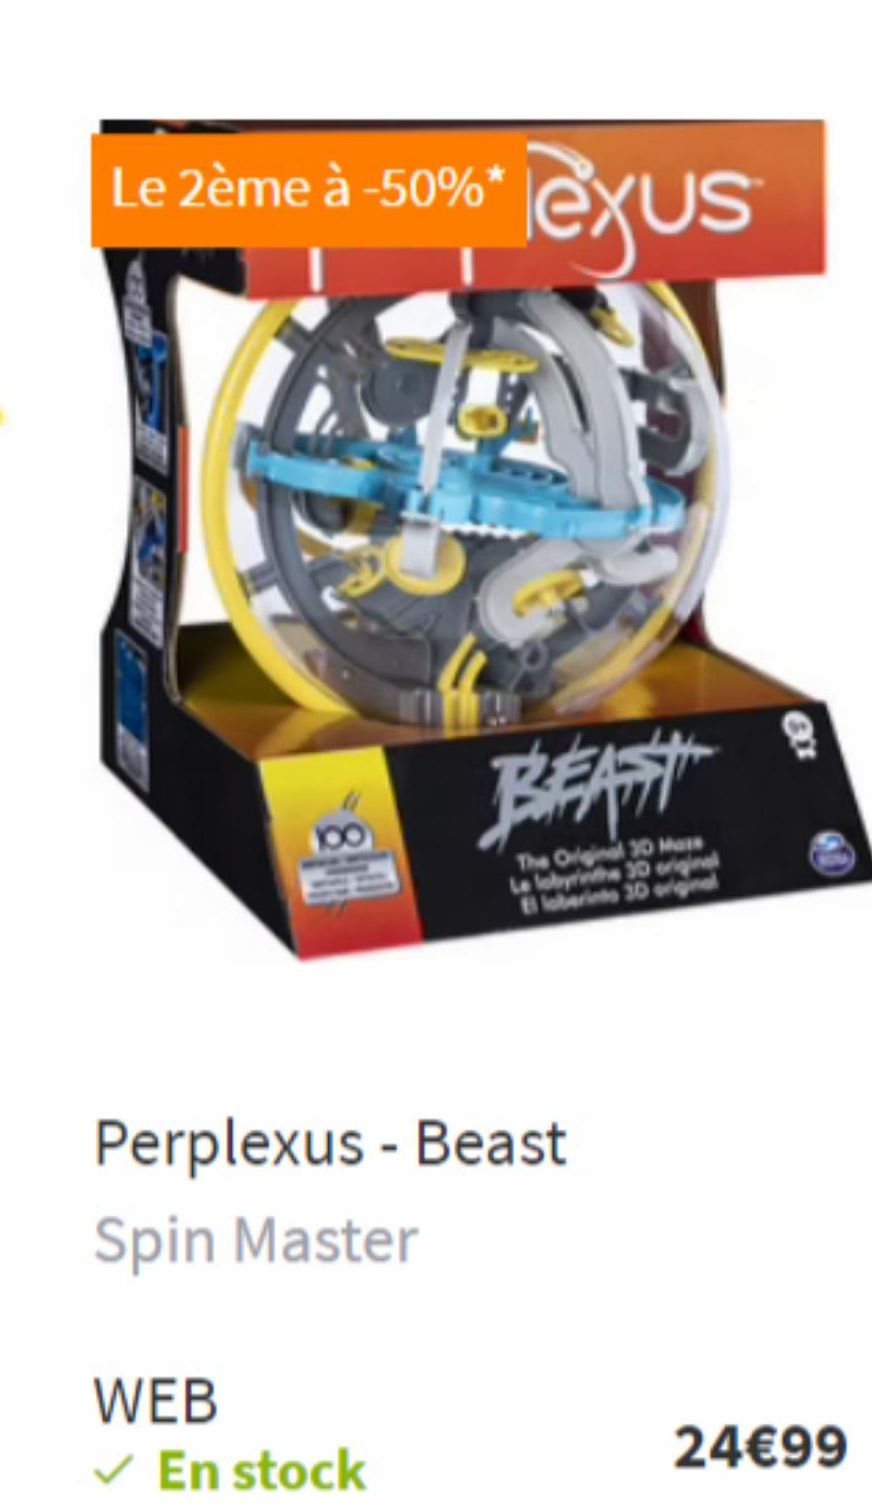 Perplexus - Beats